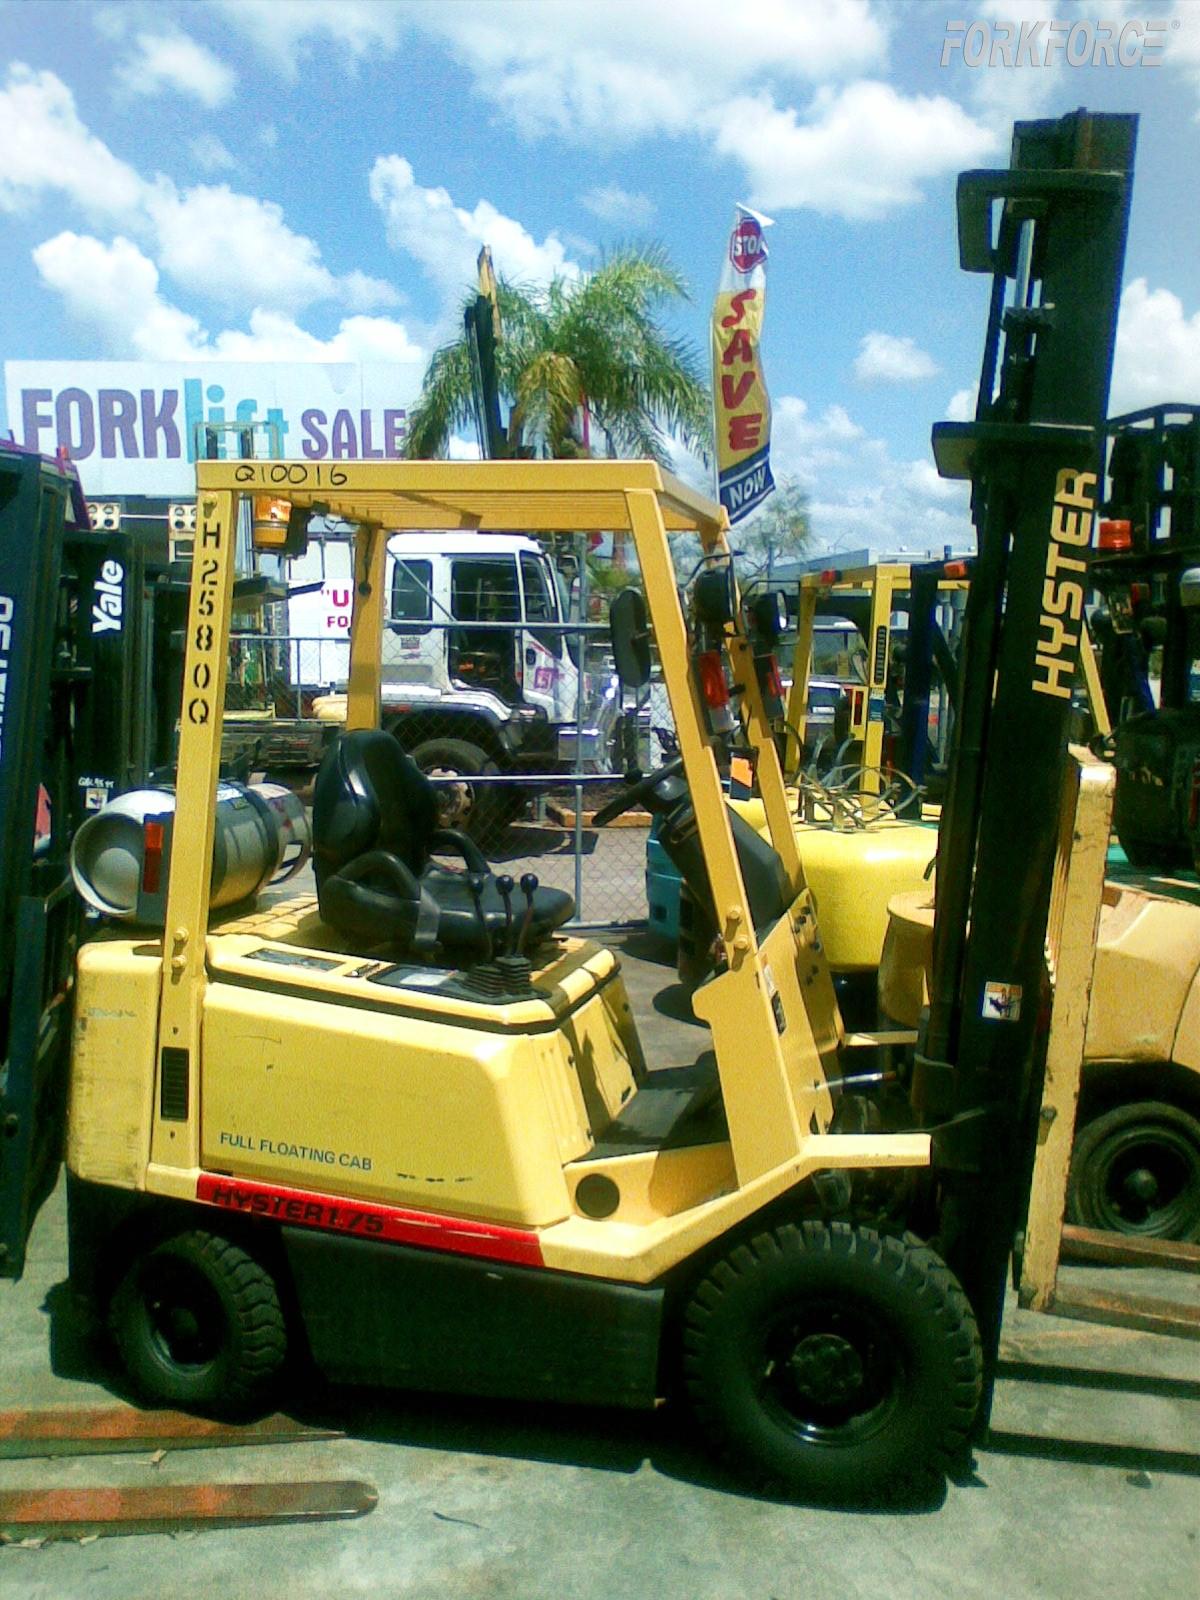 Hyster 1.5T Forklift